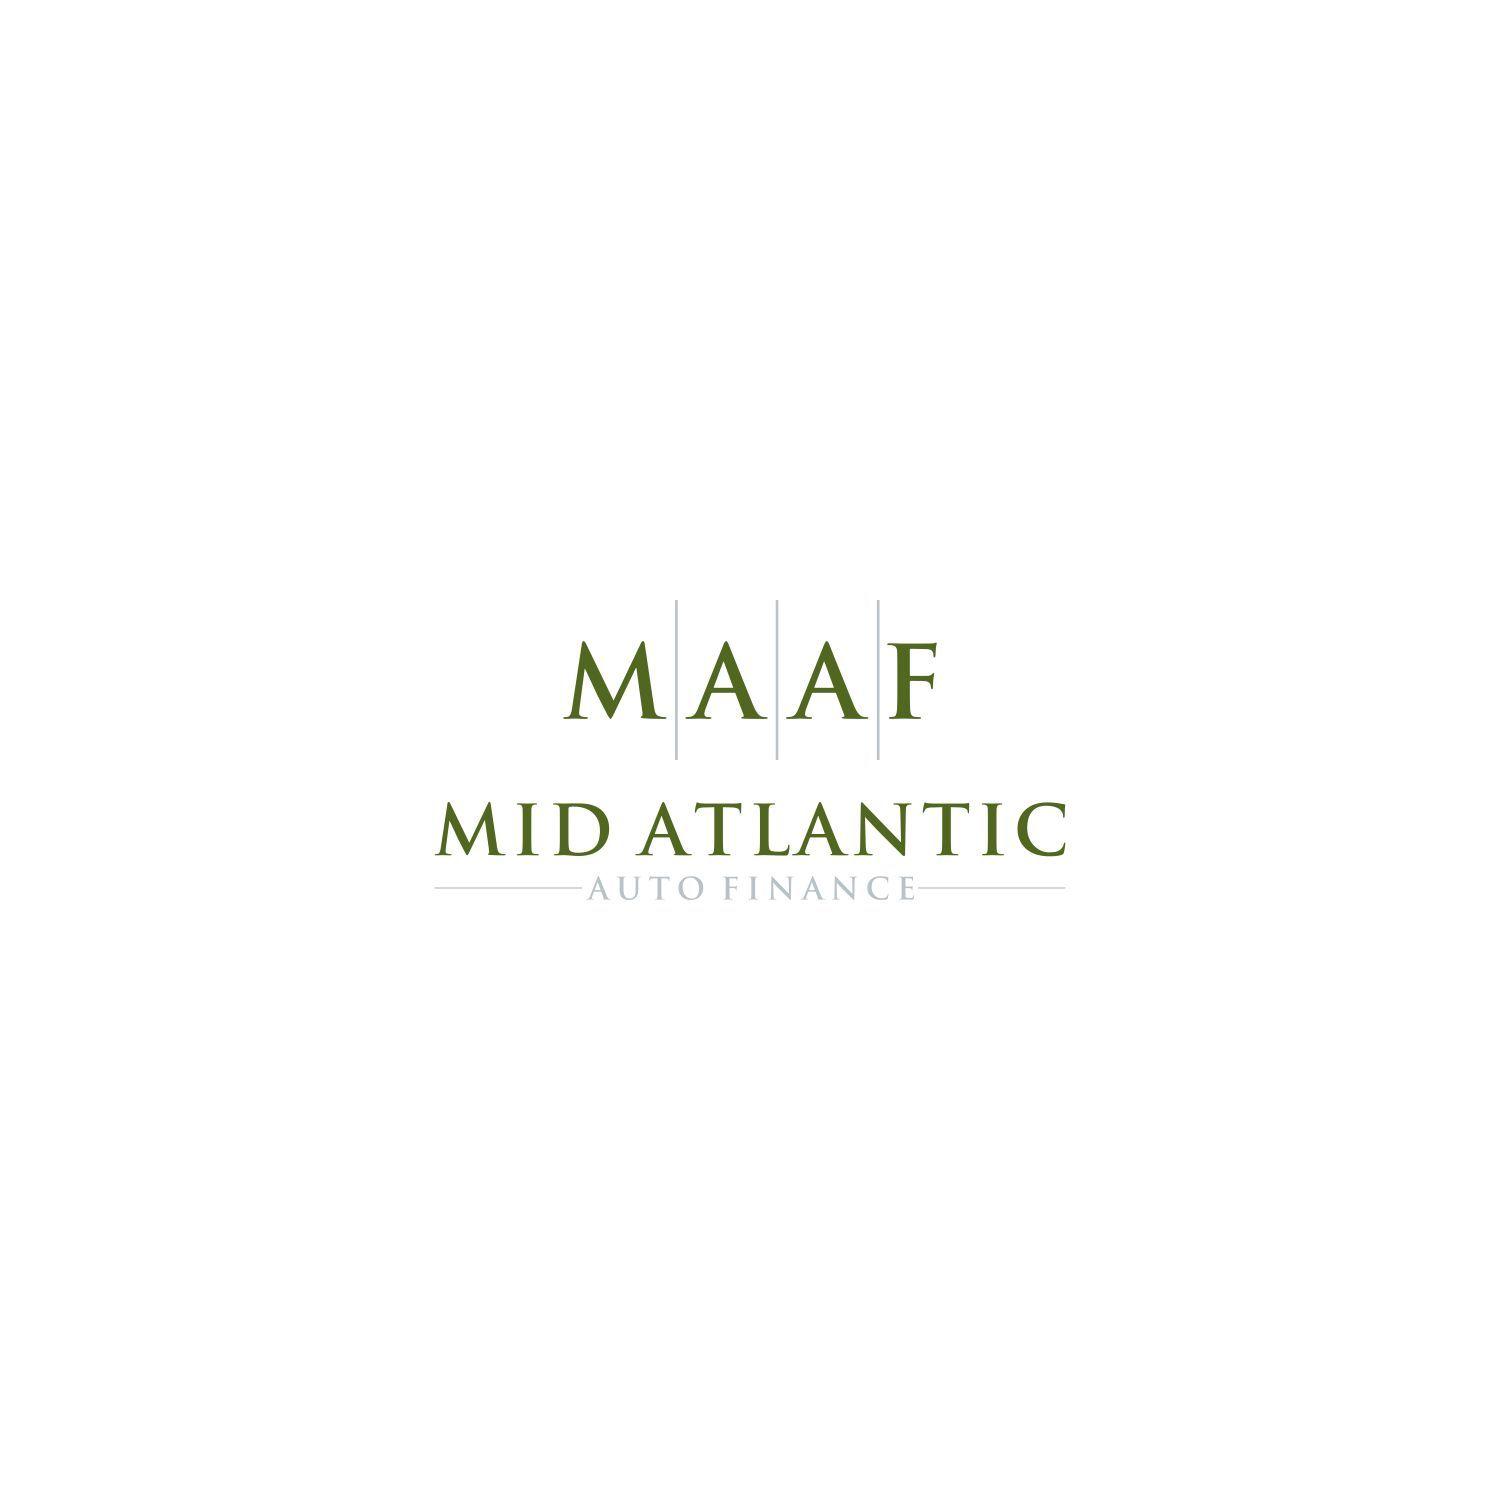 Auto Finance Logo - Elegant, Playful, Finance Logo Design for Mid Atlantic Auto Finance